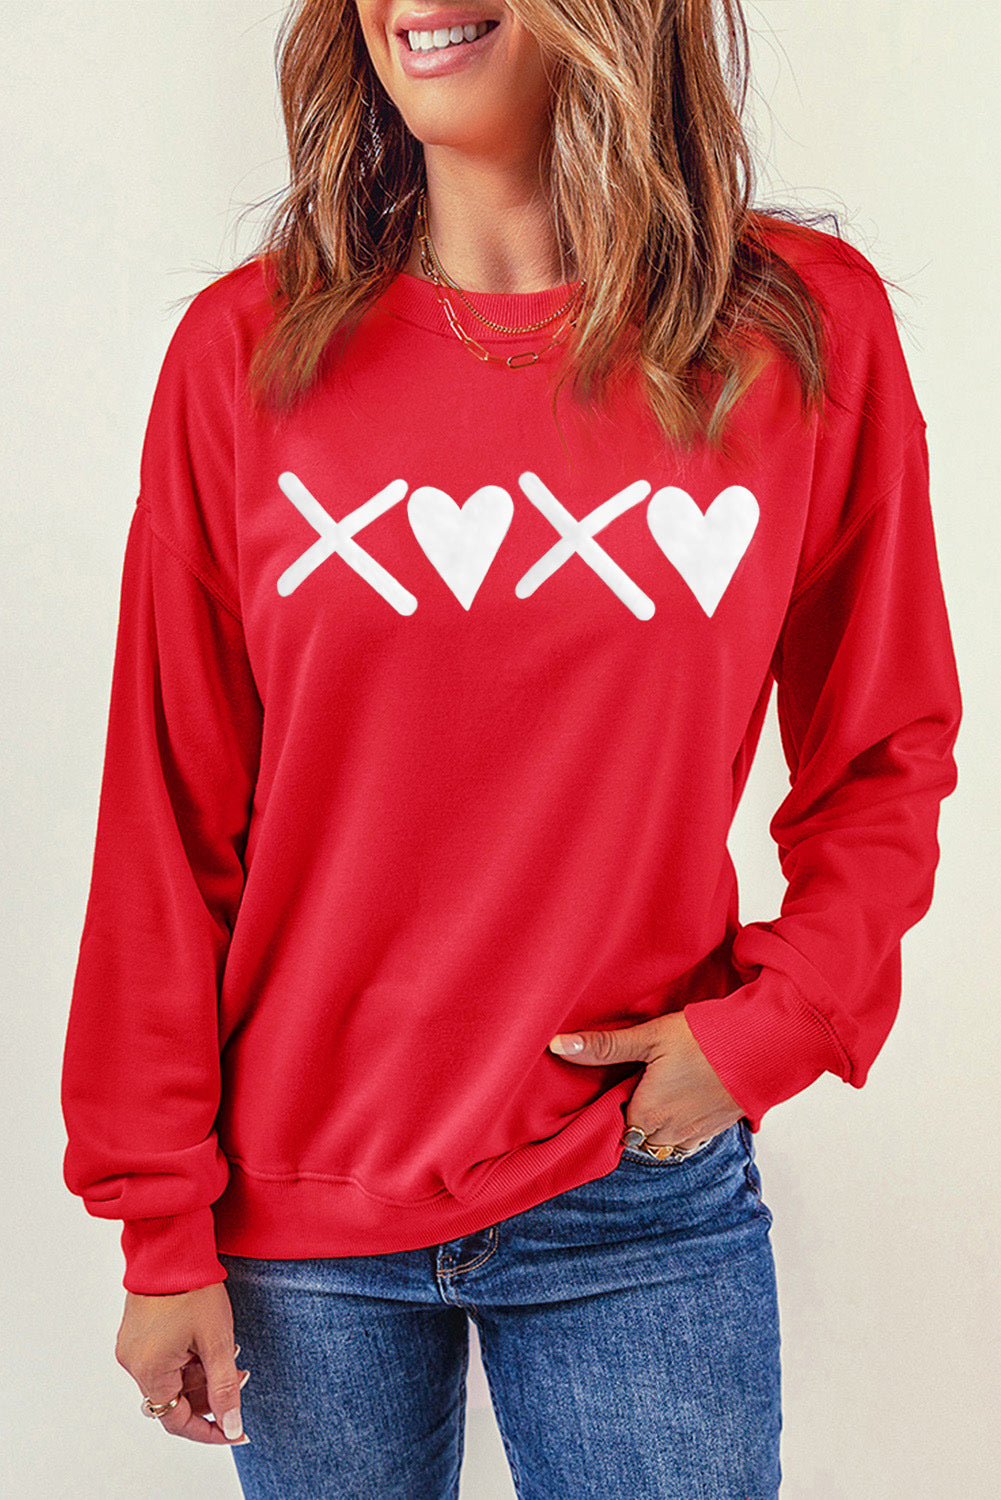 Puff XOXO Print Valentines Heart Sweatshirt